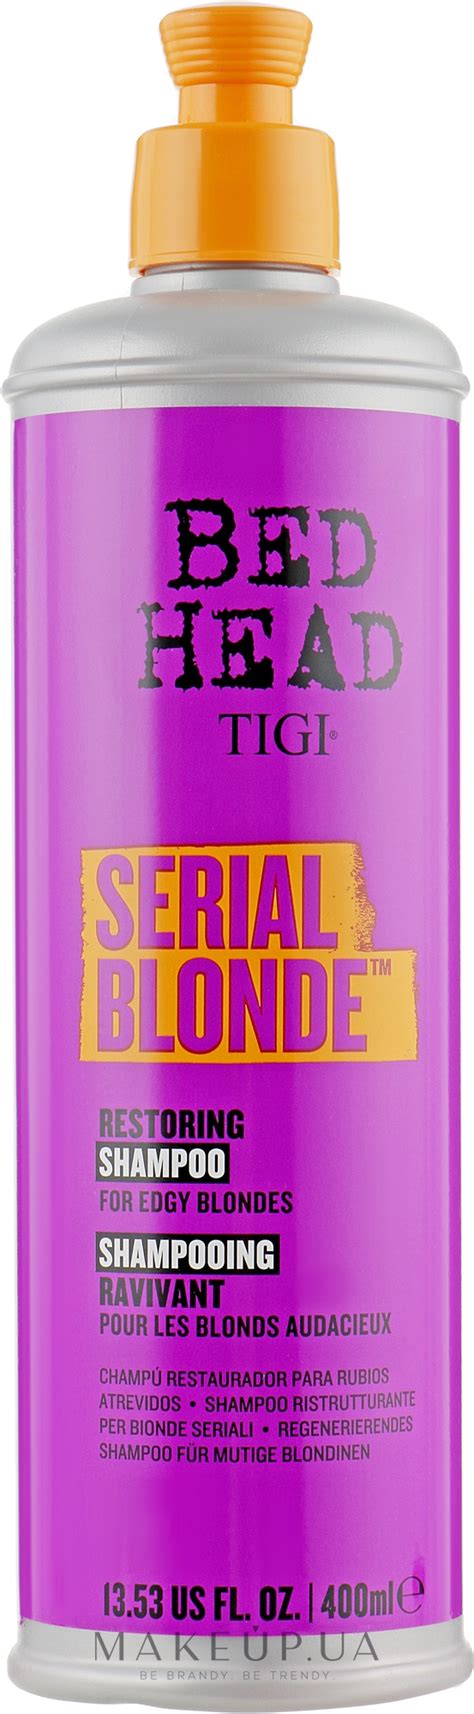 Tigi Bed Head Serial Blonde Shampoo